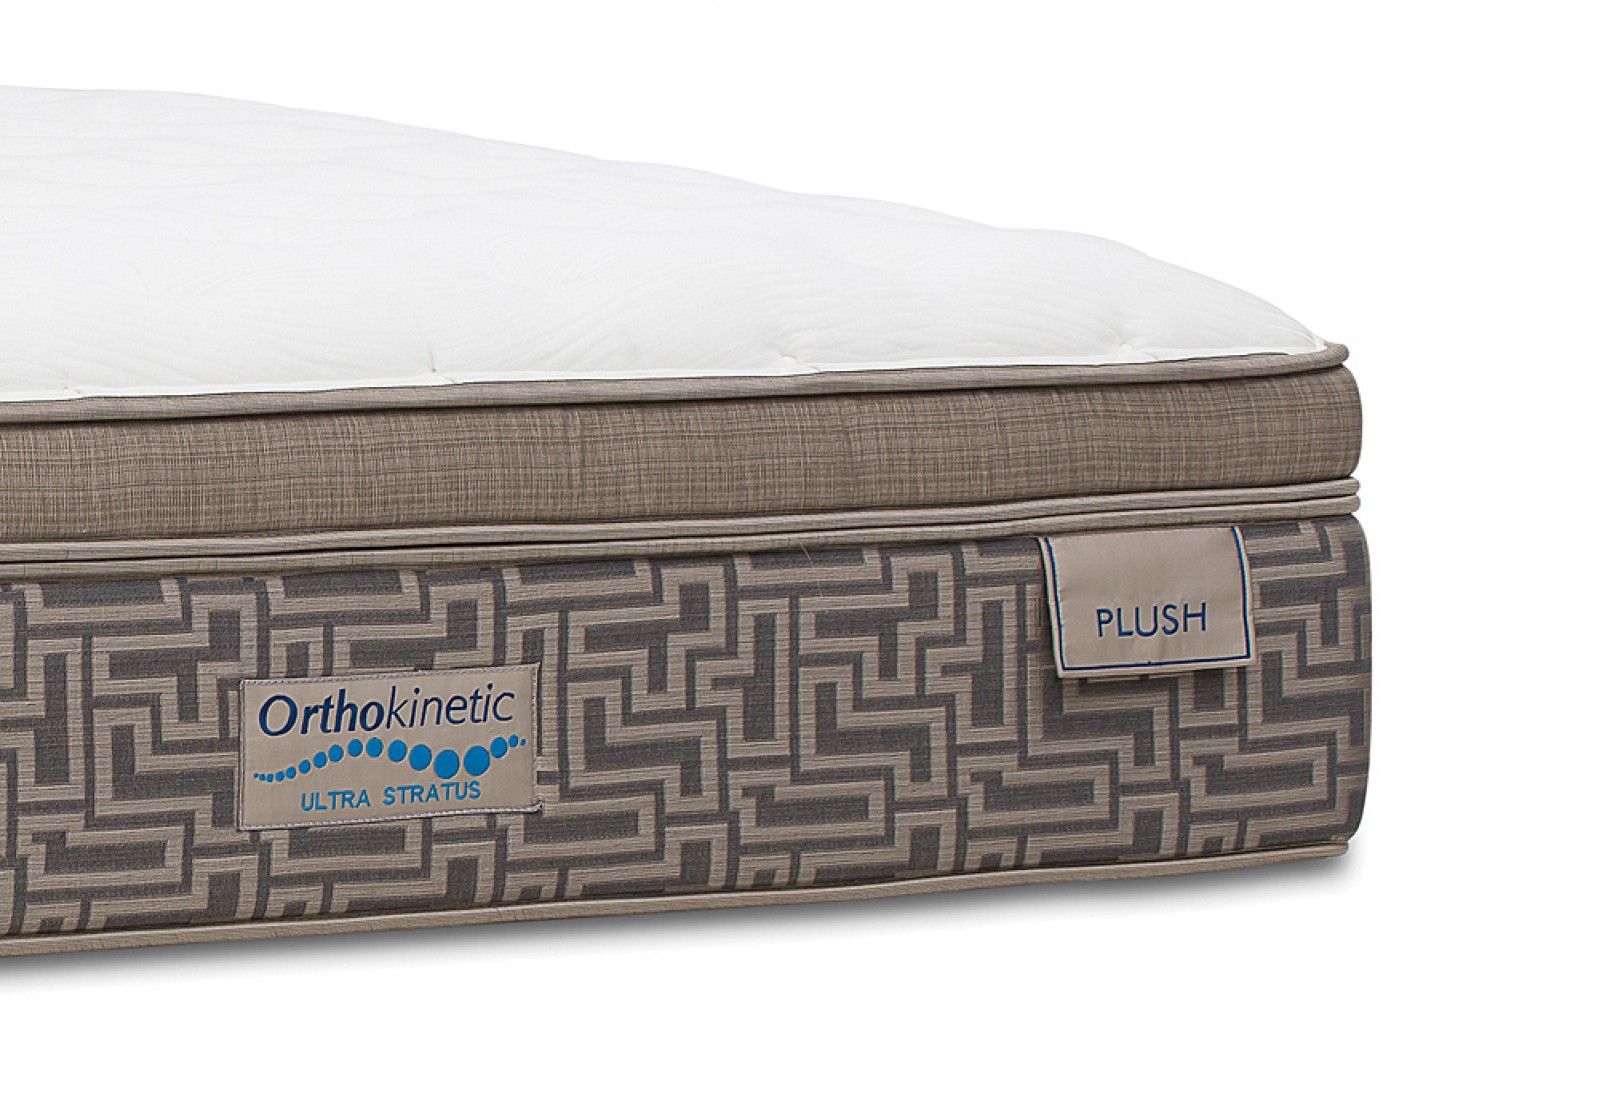 orthokinetic ultra stratus plush queen mattress